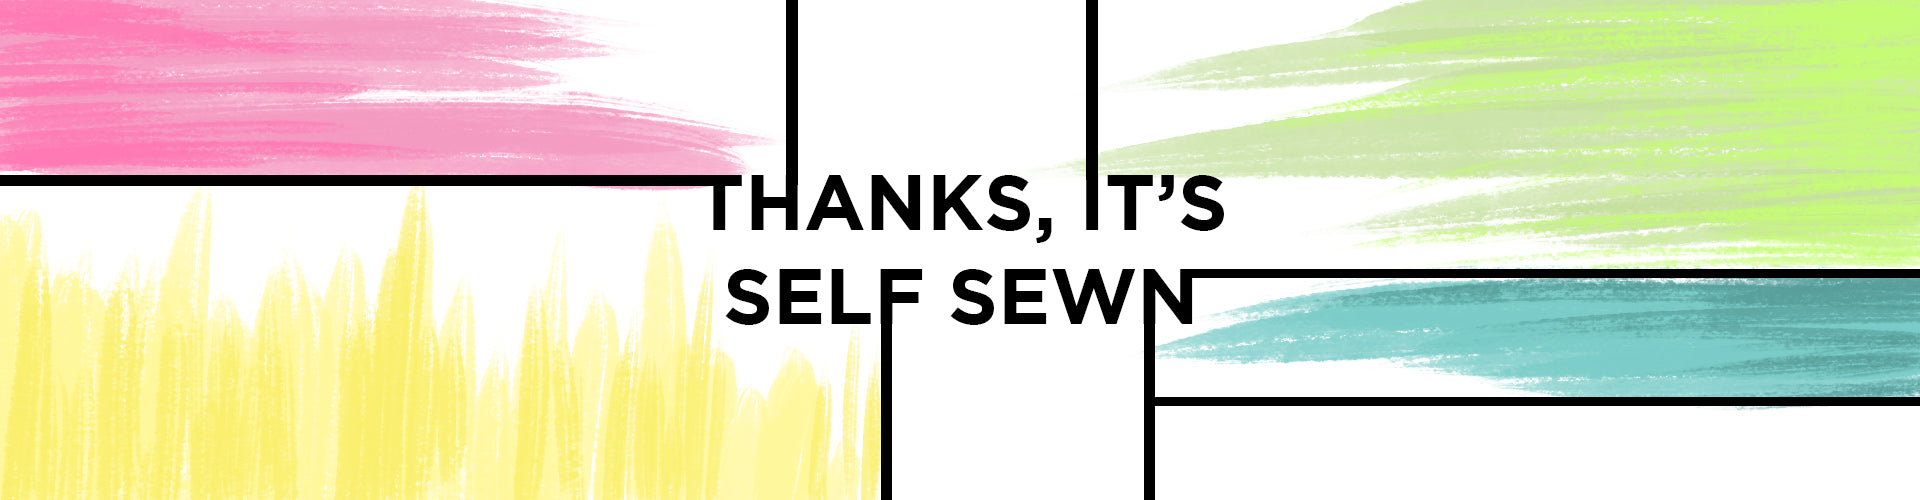 Thanks, It's Self Sewn!